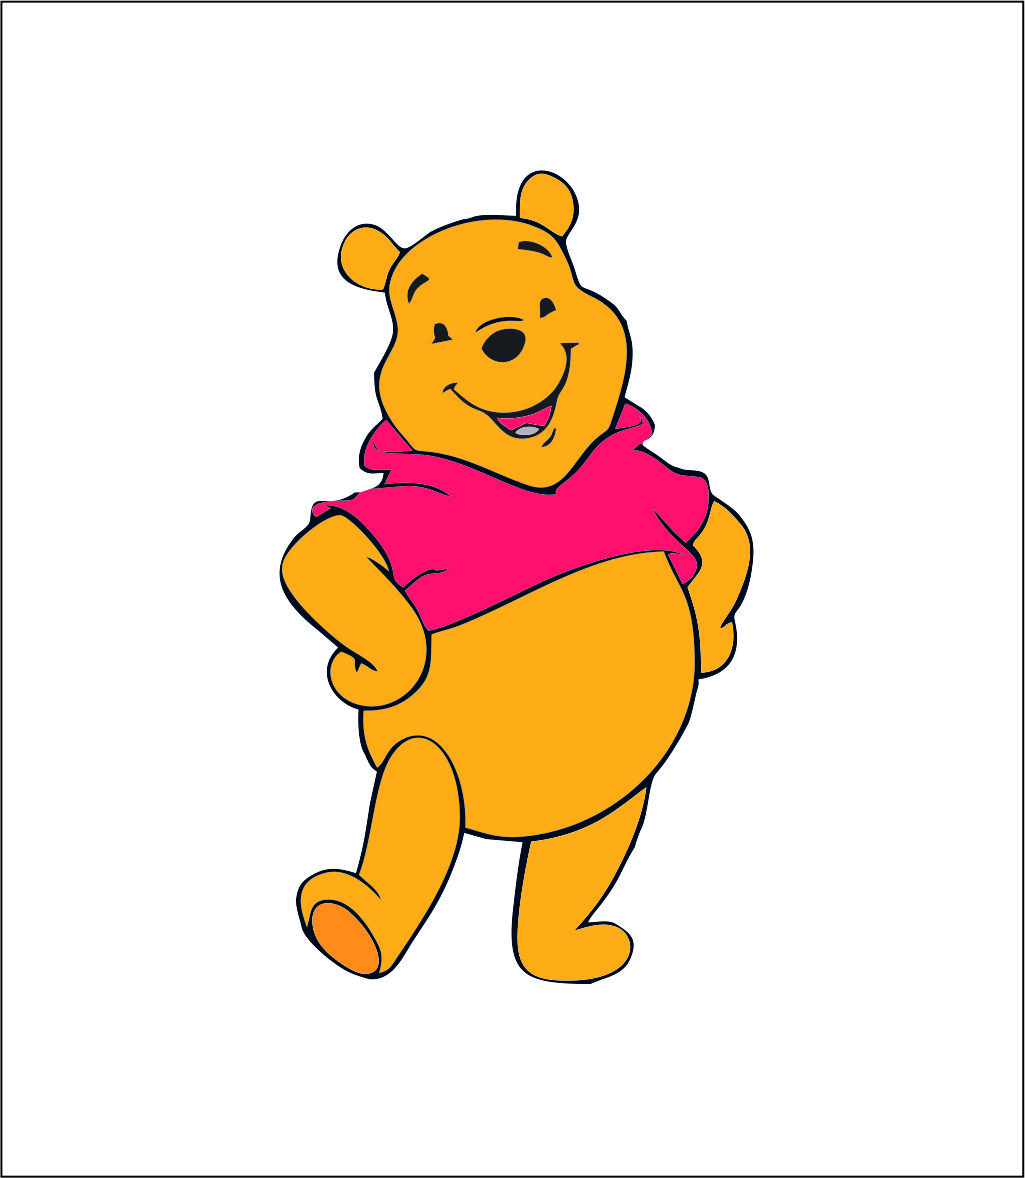 Winnie the Pooh logo | SVGprinted